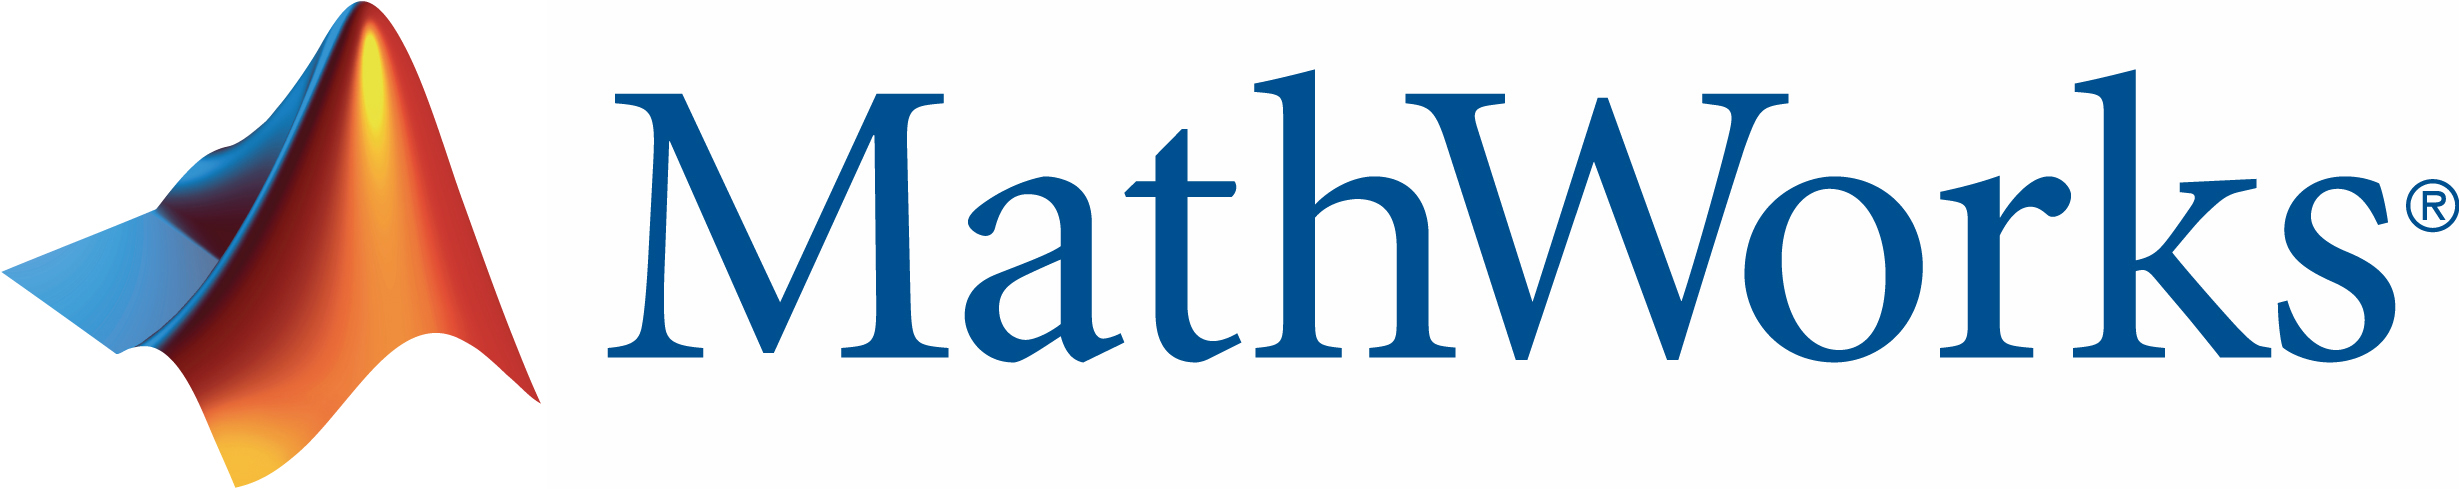 mathwork logo